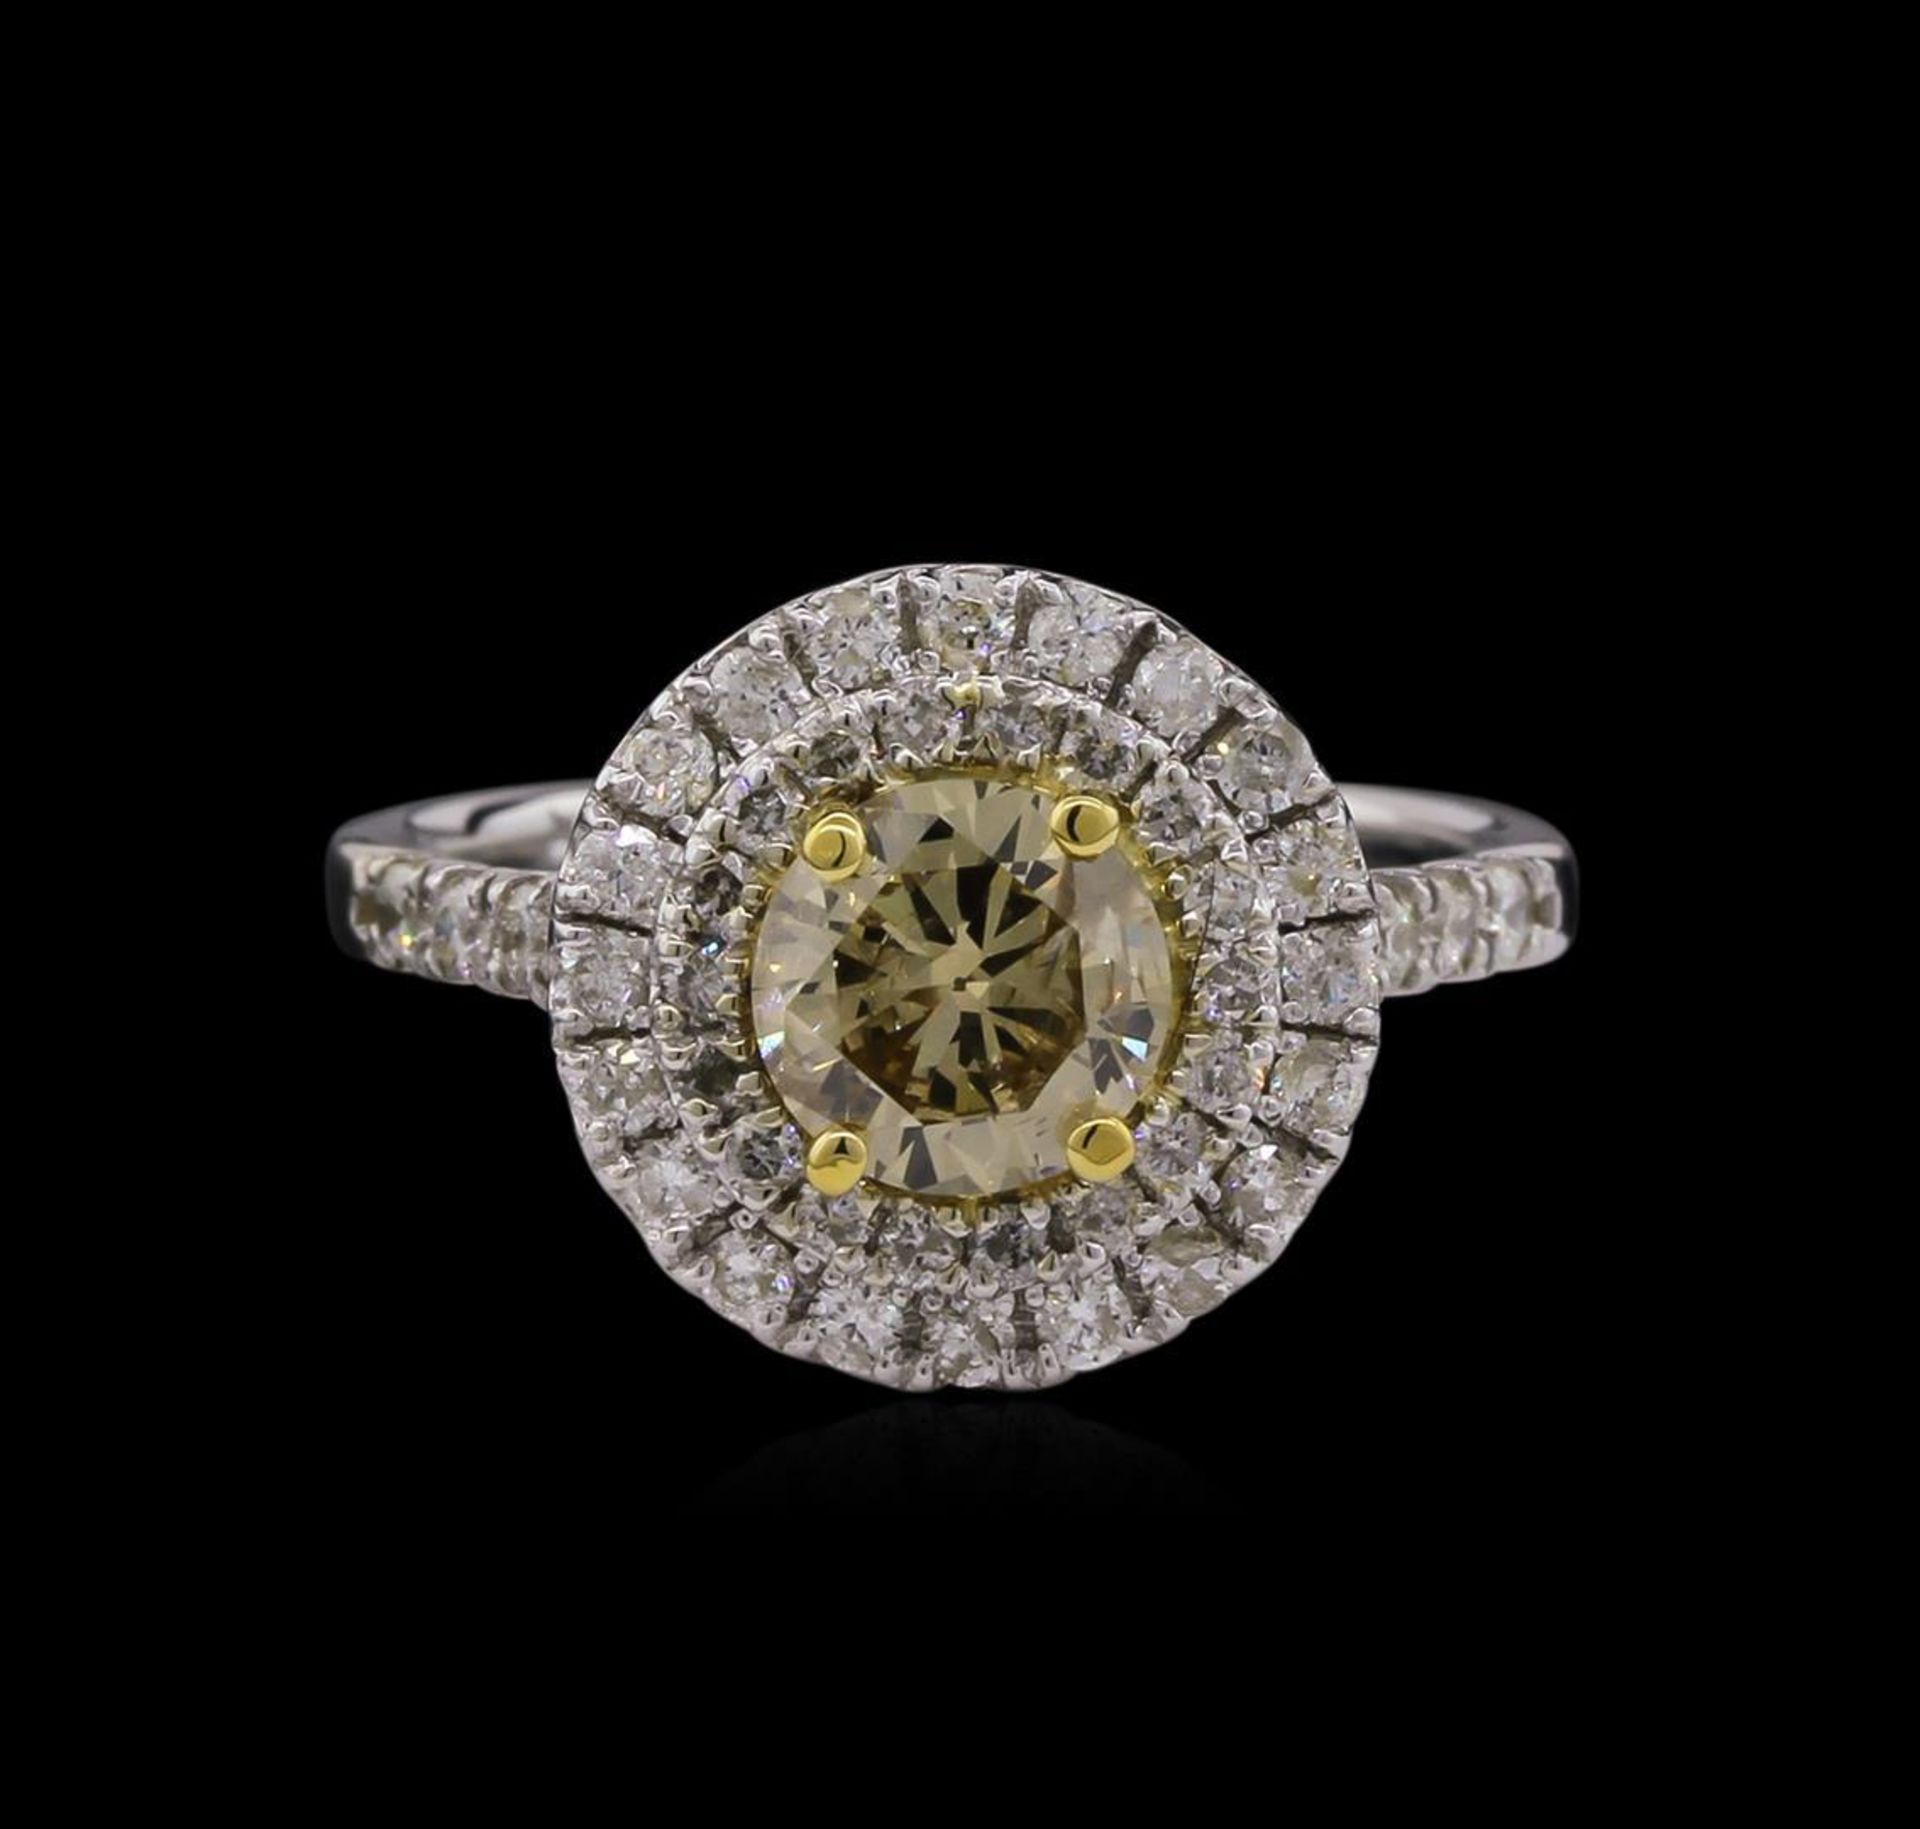 14KT White Gold 1.61 ctw Diamond Ring - Image 2 of 3